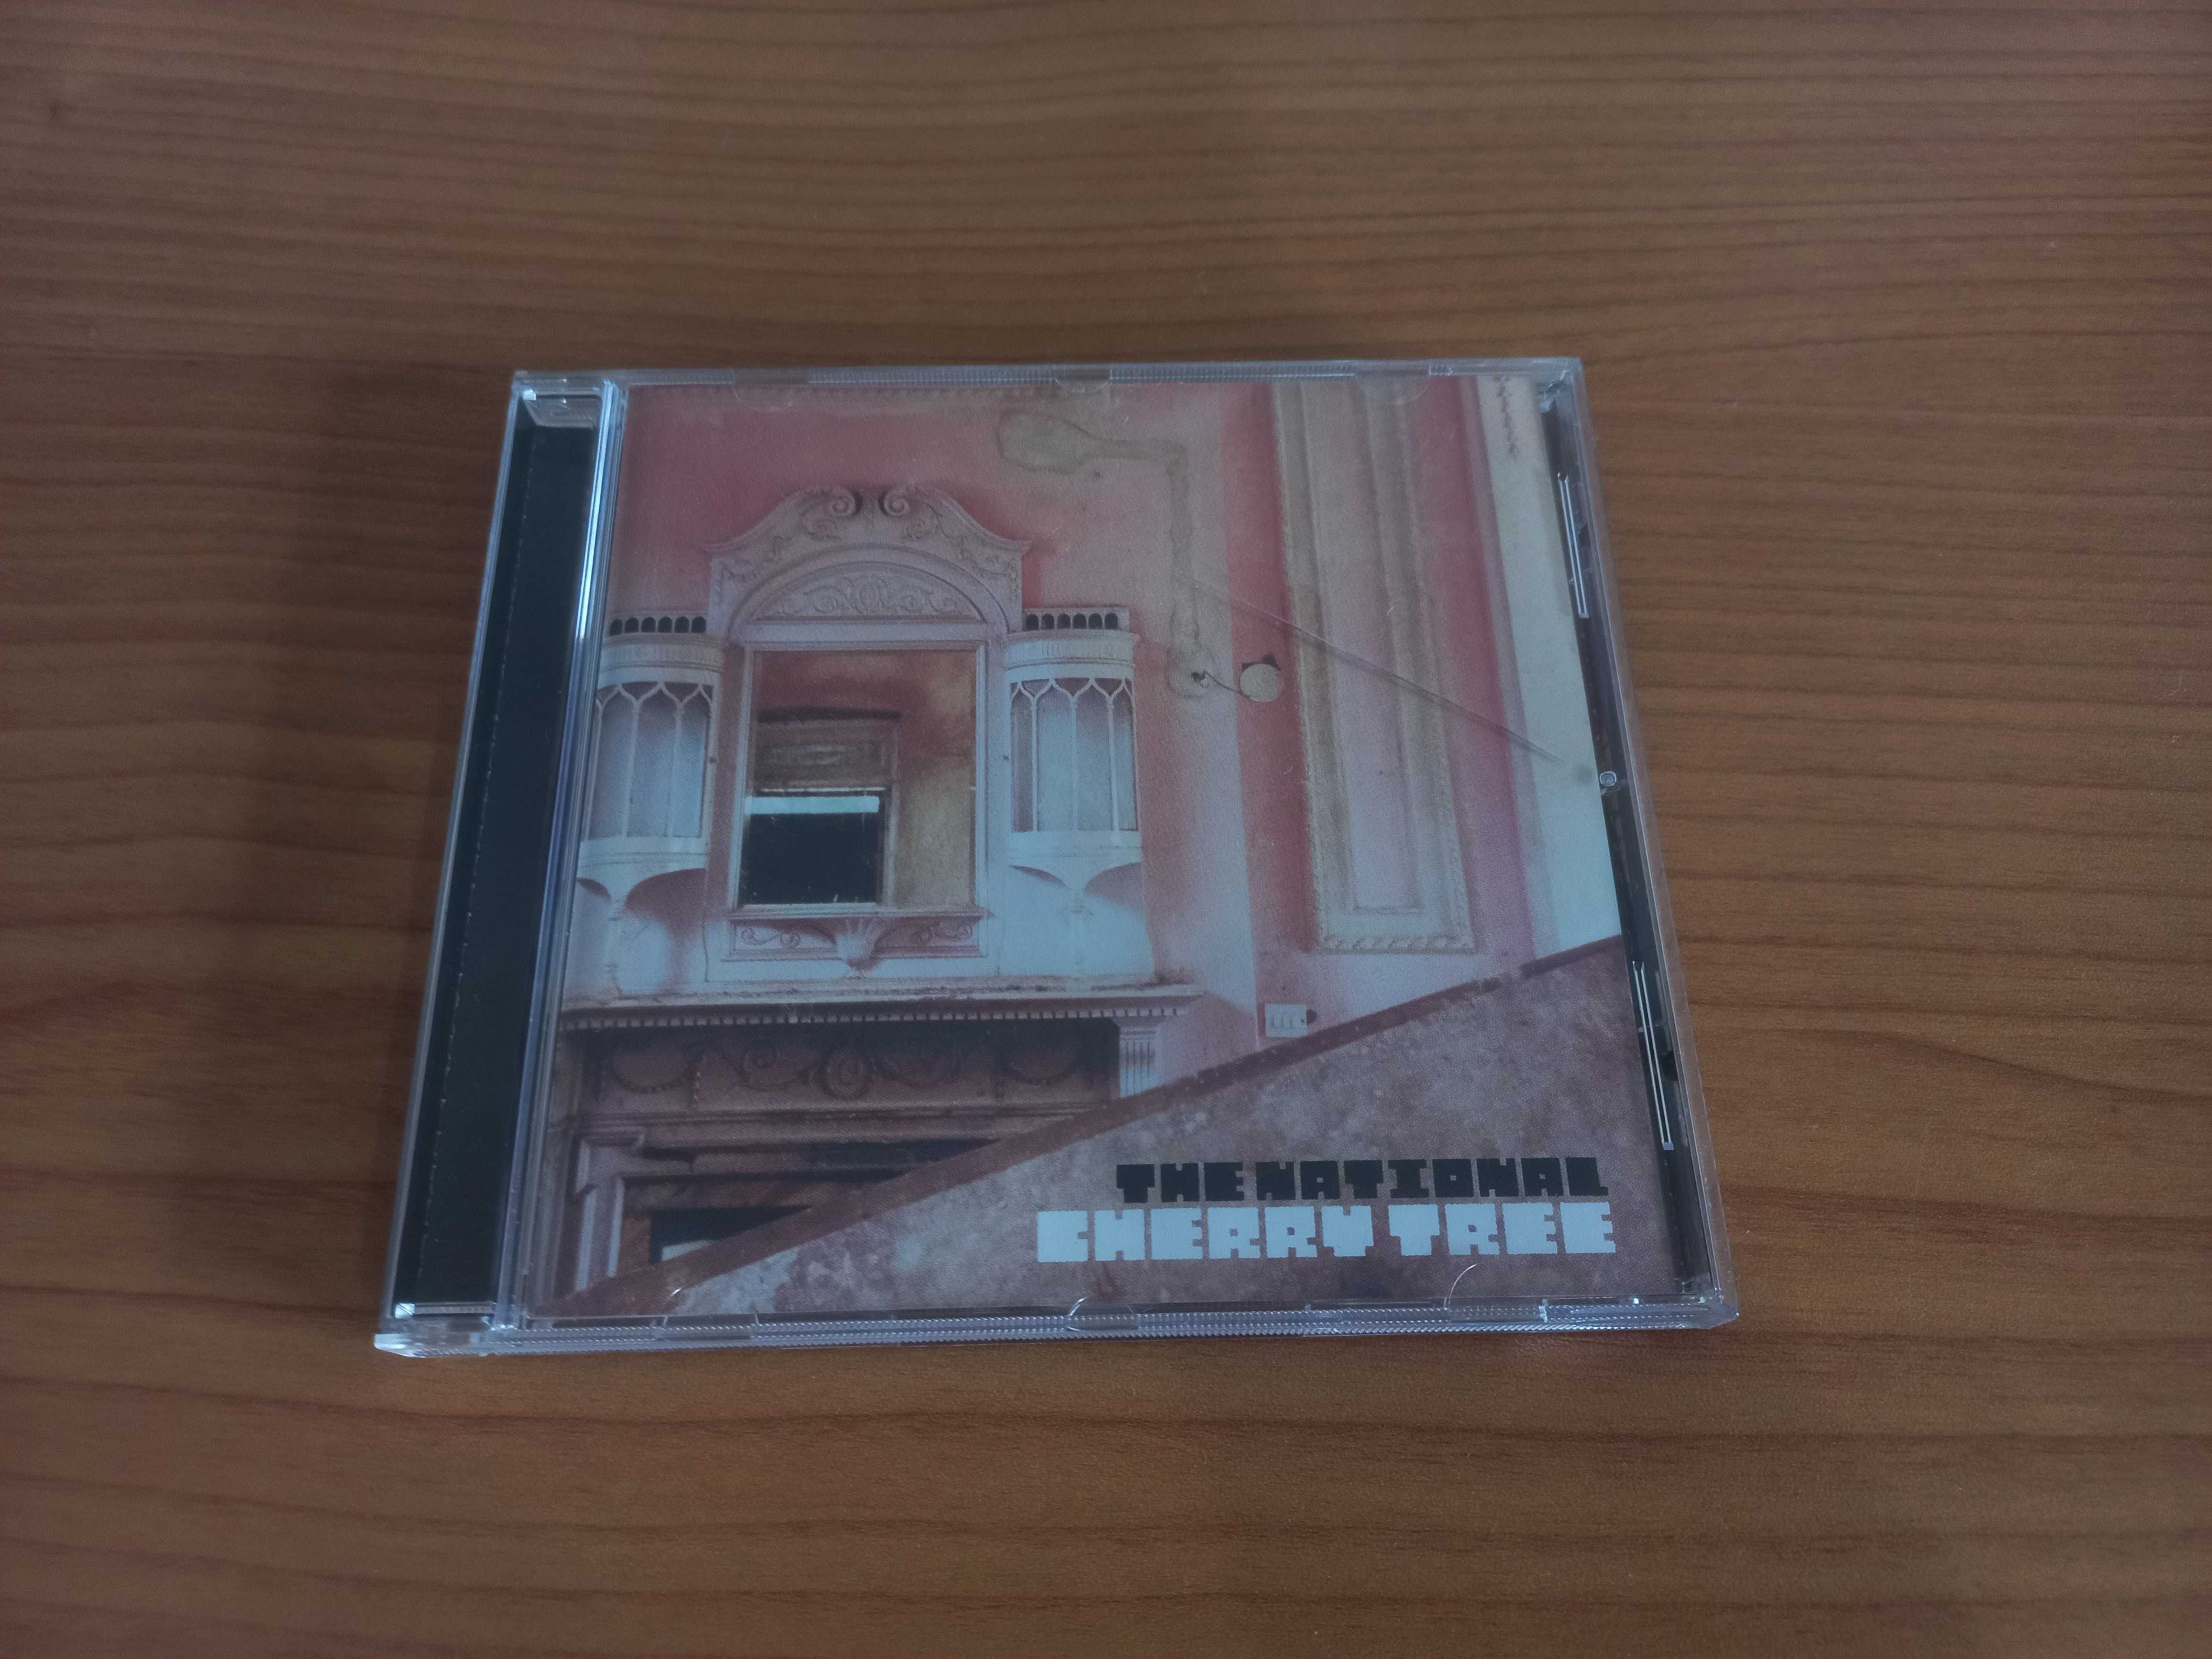 Álbuns (CD) - 2º conjunto